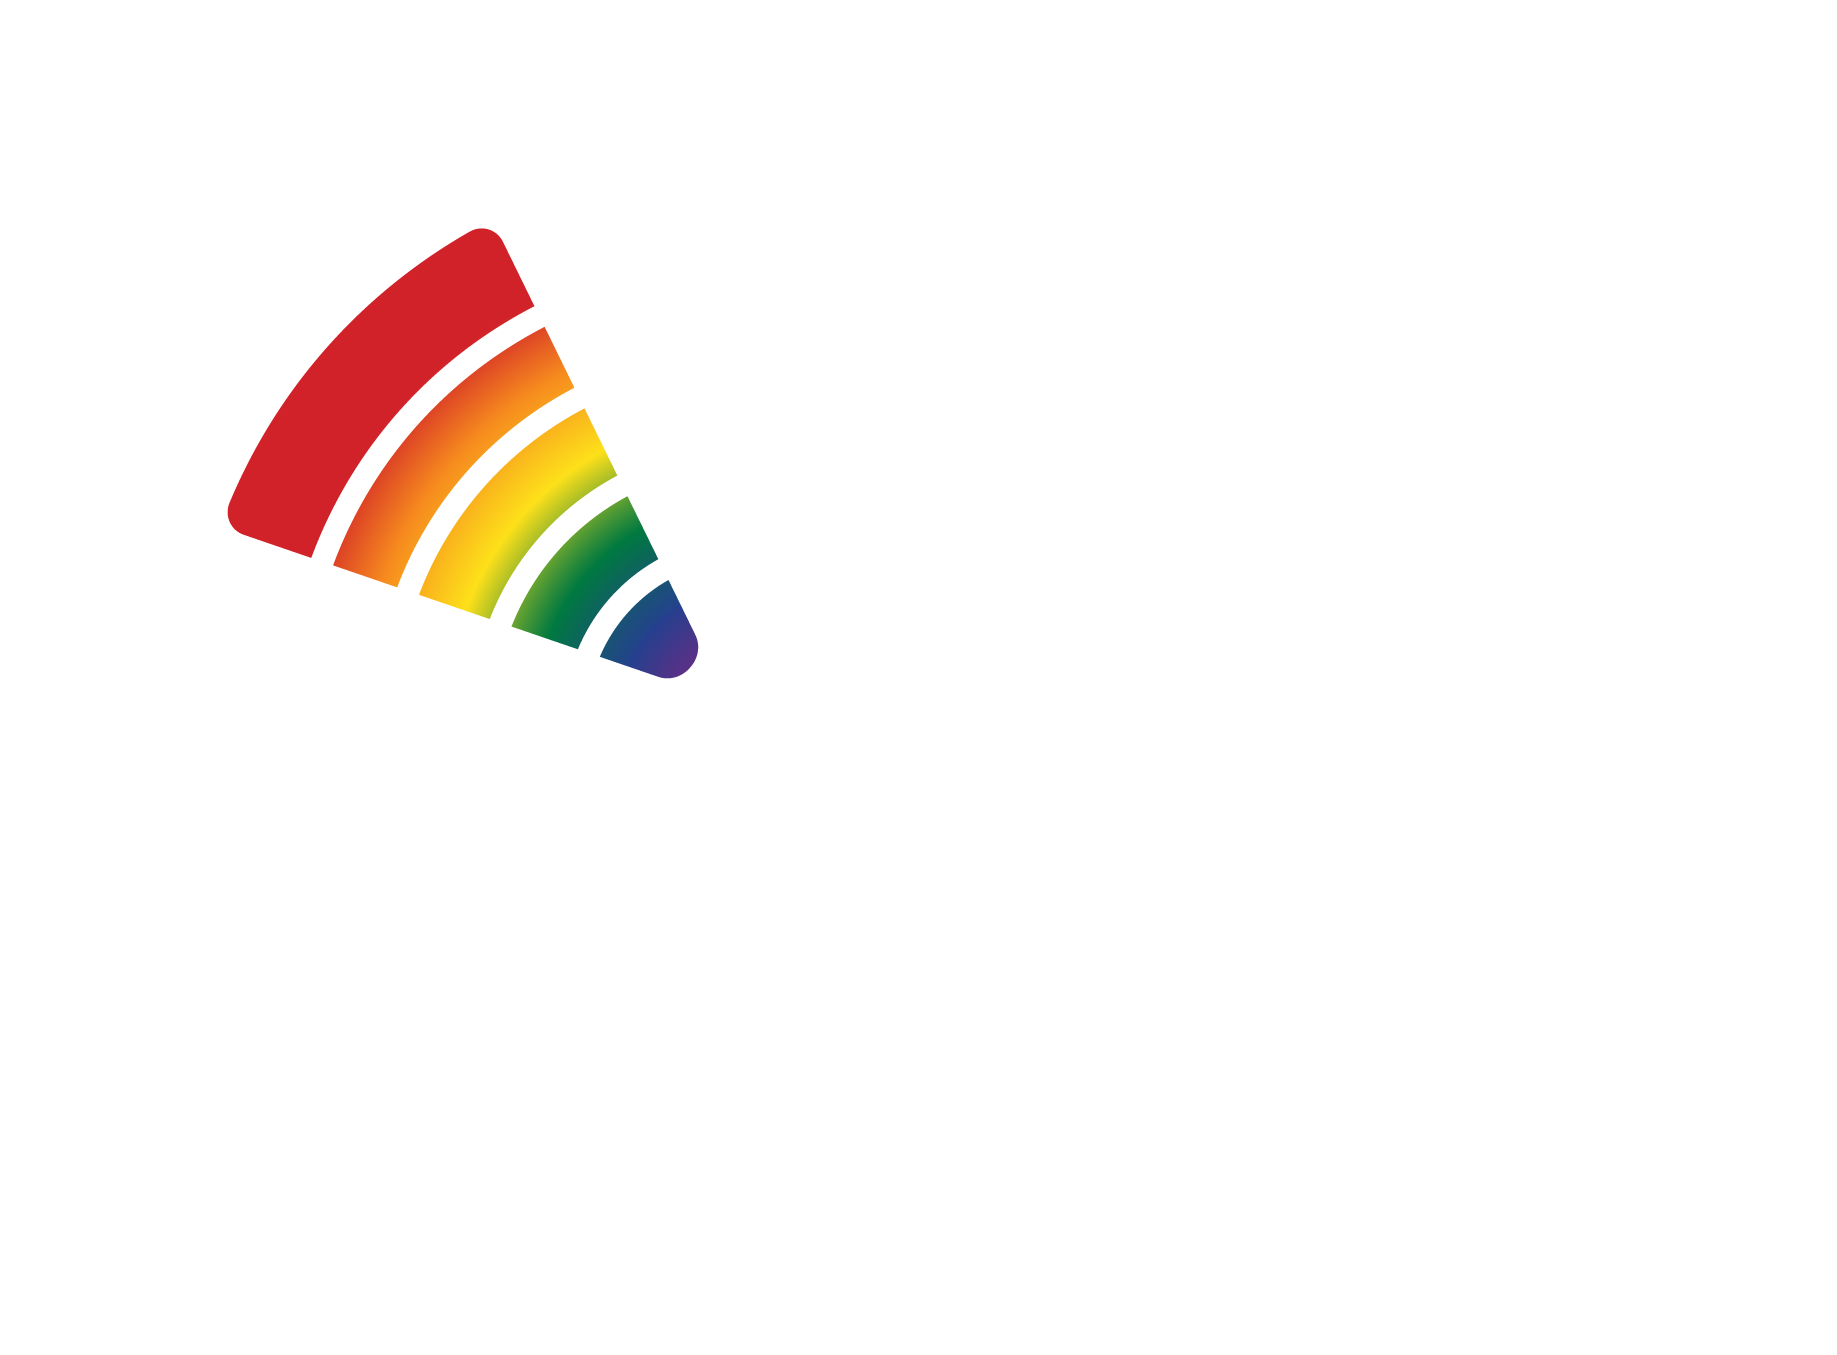 Work Selection